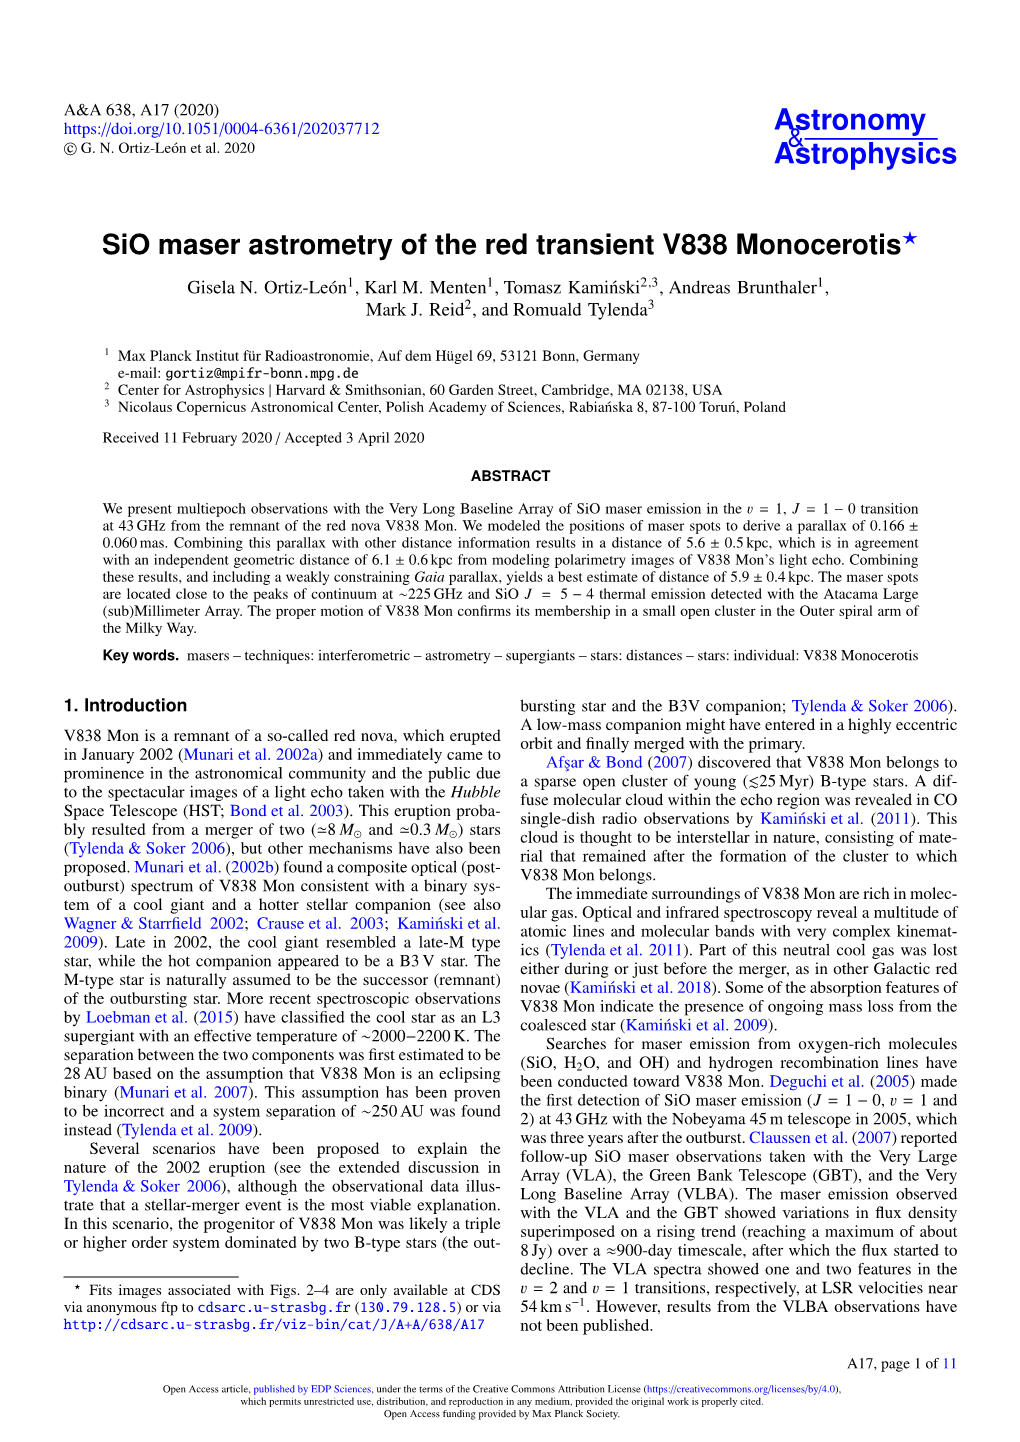 Sio Maser Astrometry of the Red Transient V838 Monocerotis? Gisela N